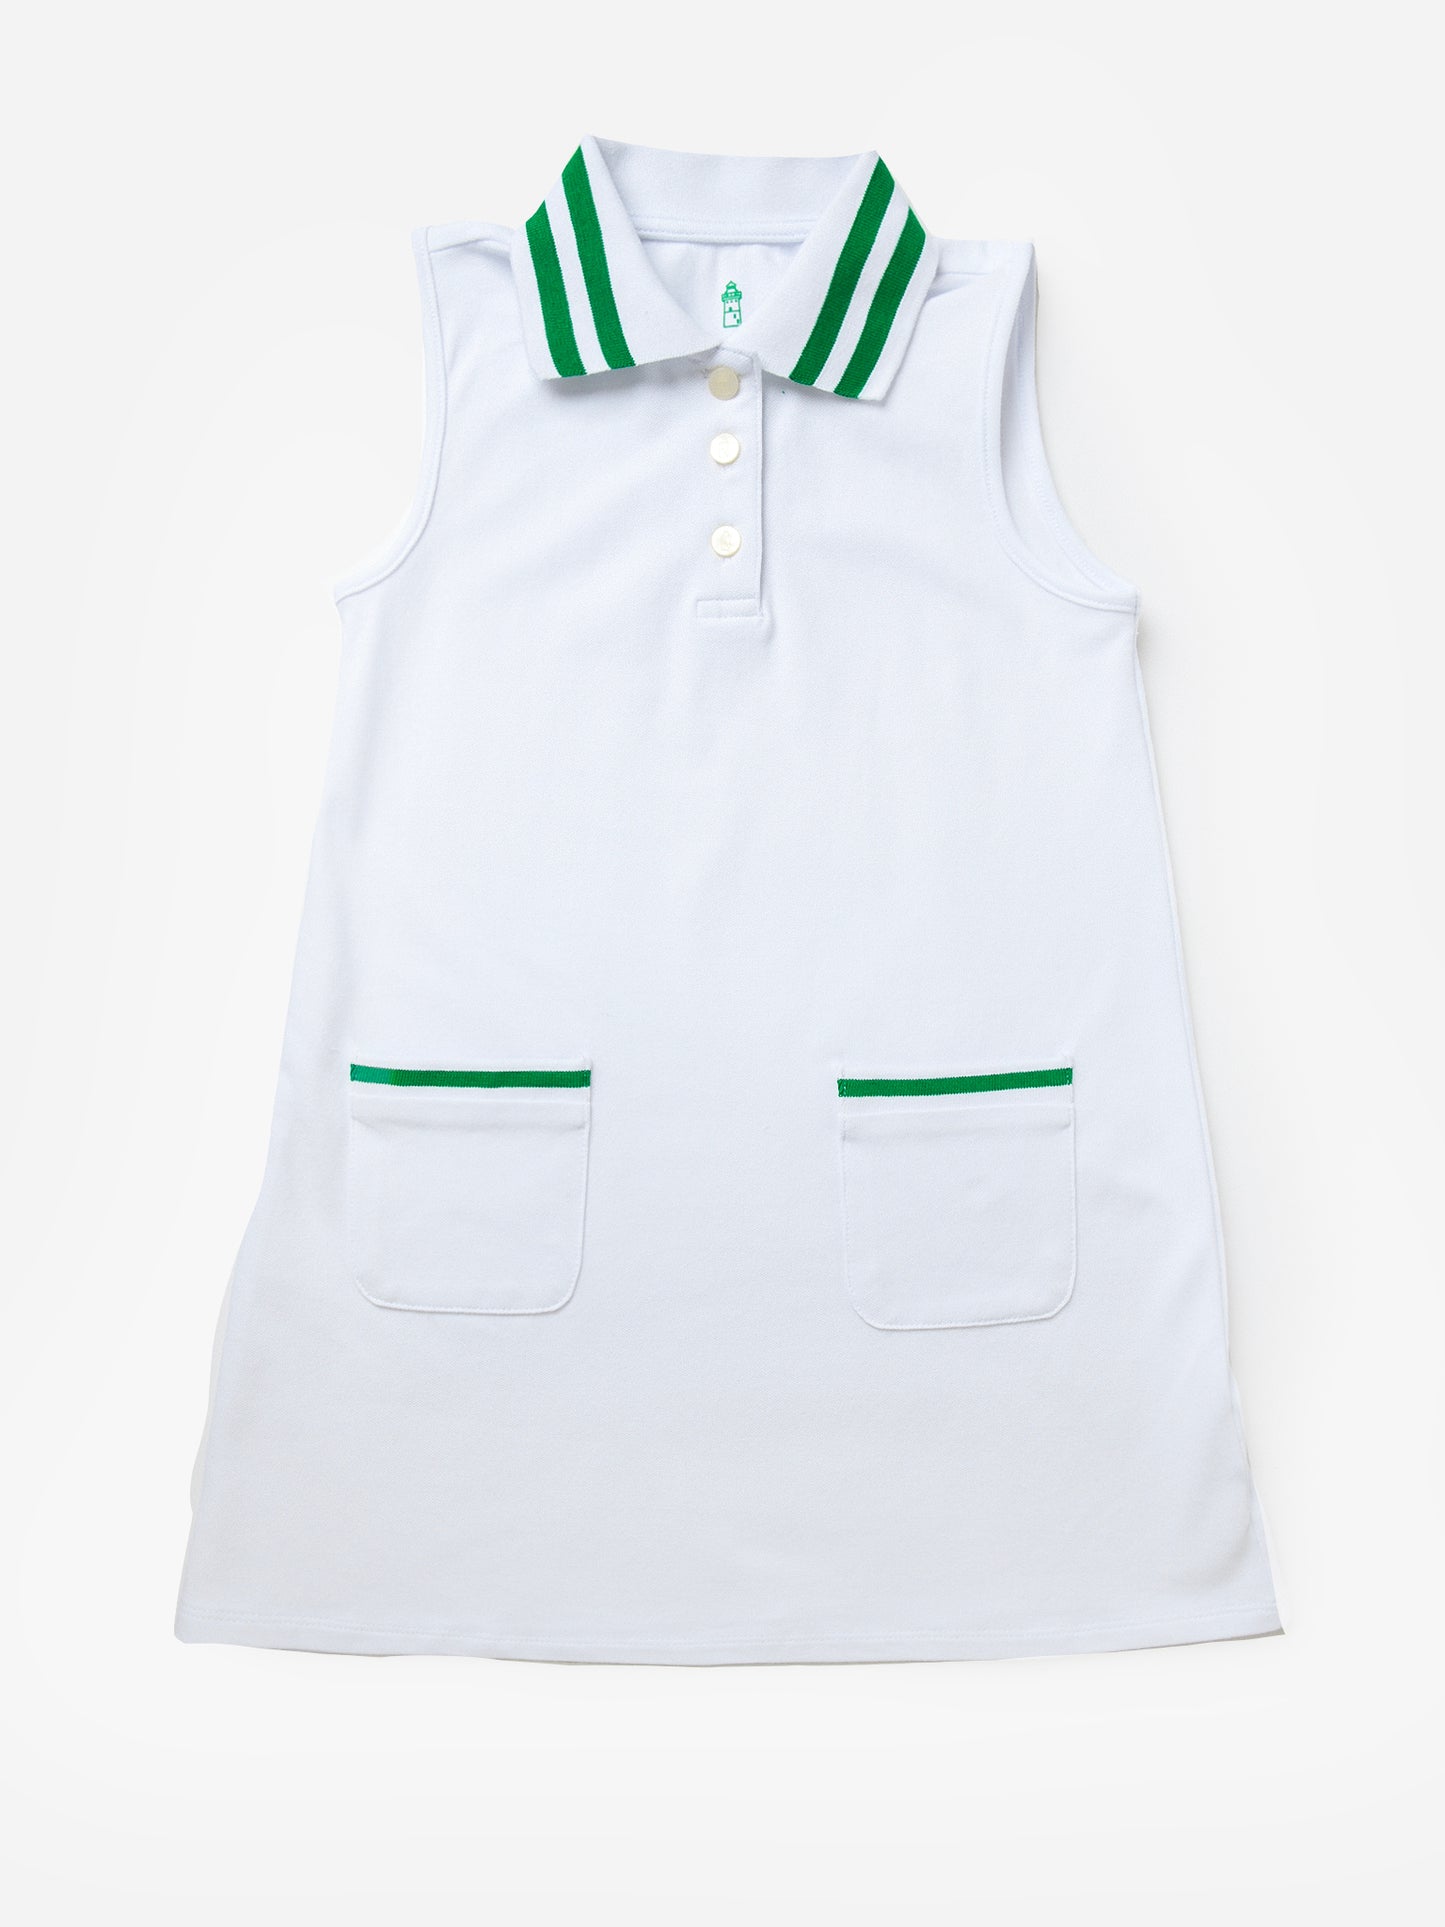 Classic Prep Girls' Teagan Tennis Dress